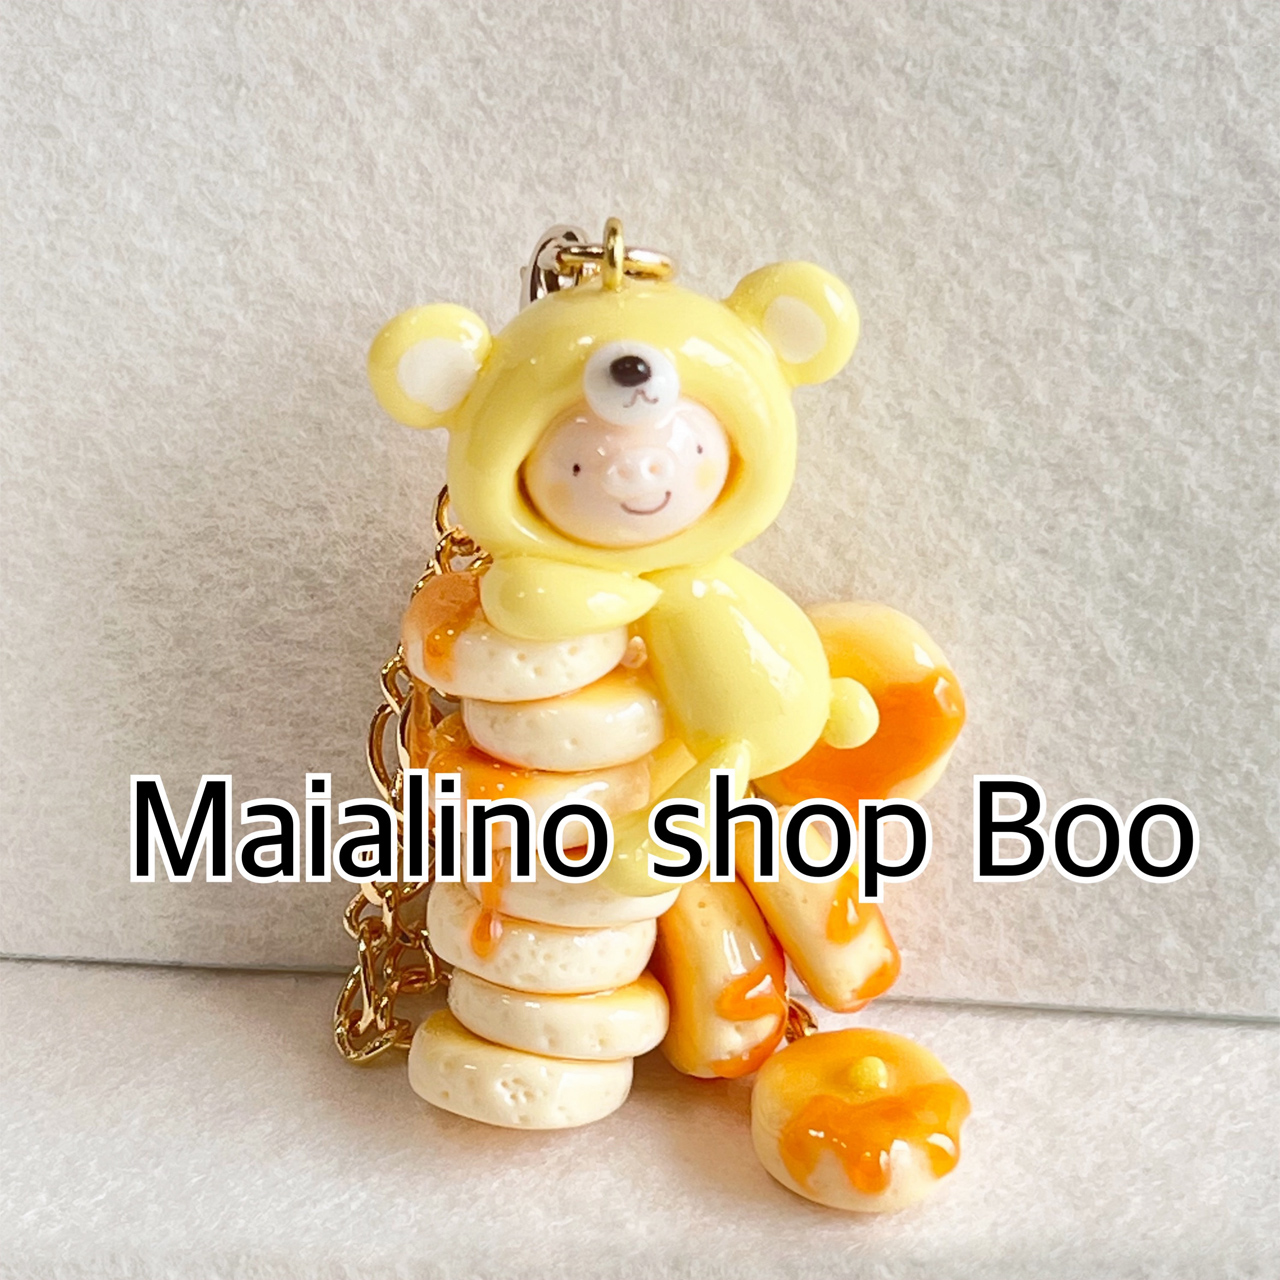 Maialino shop Boo - マイアリーノ ショップ ブー